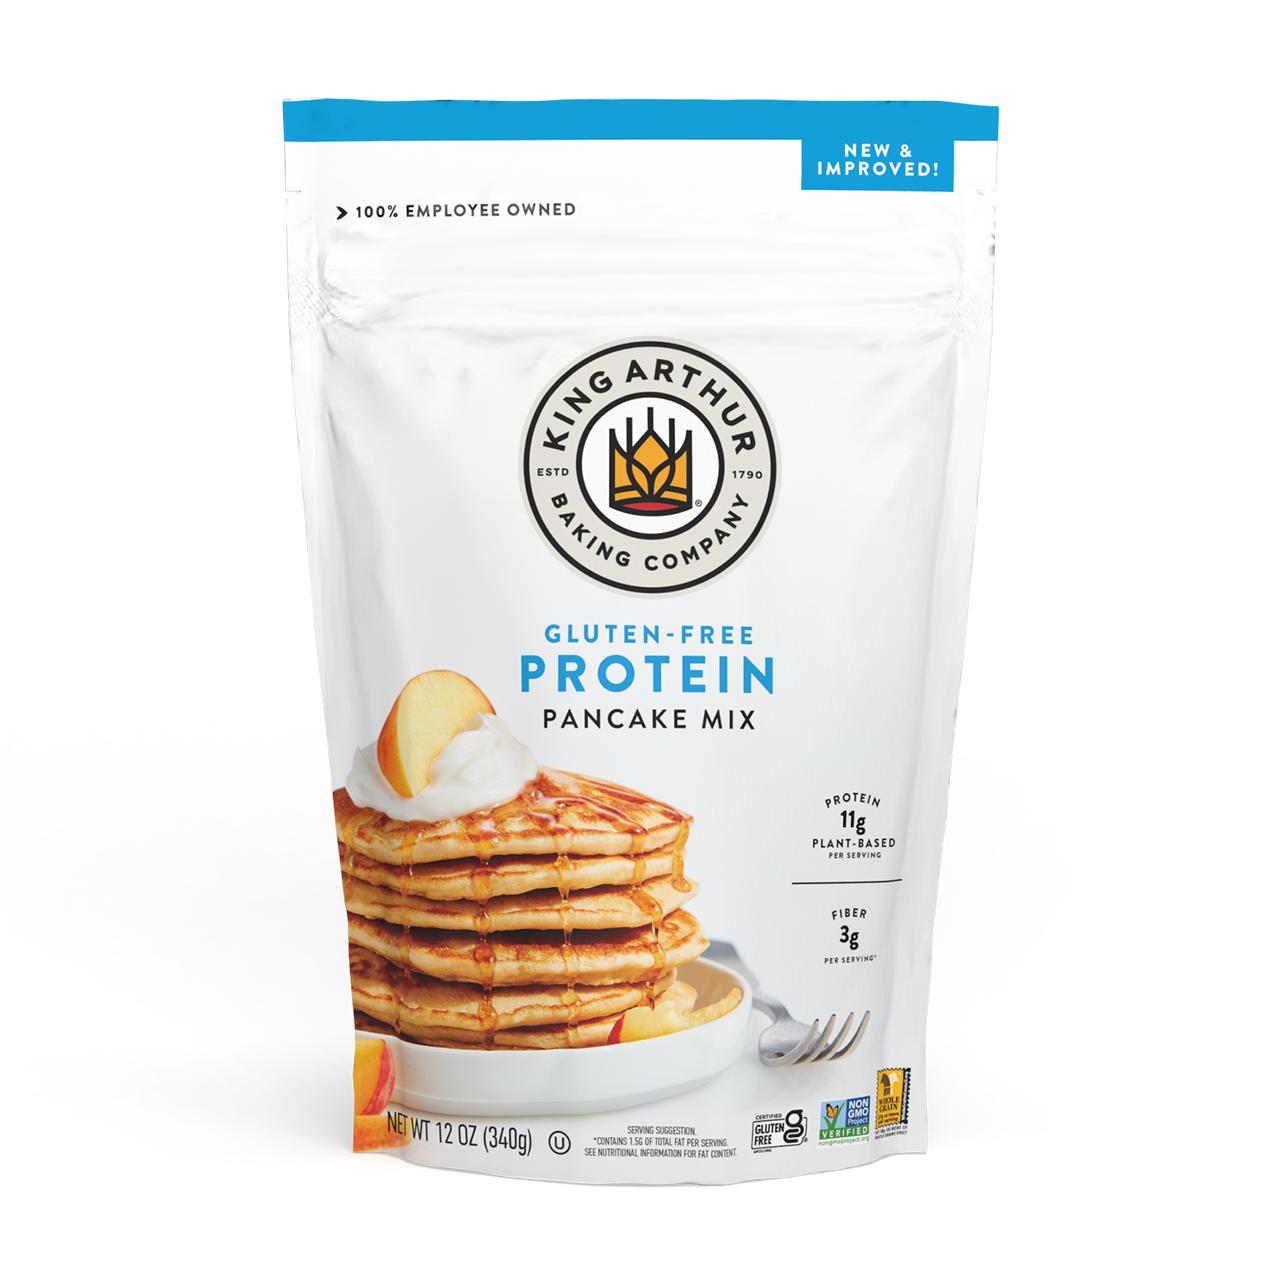 Gluten-Free Protein Pancake Mix